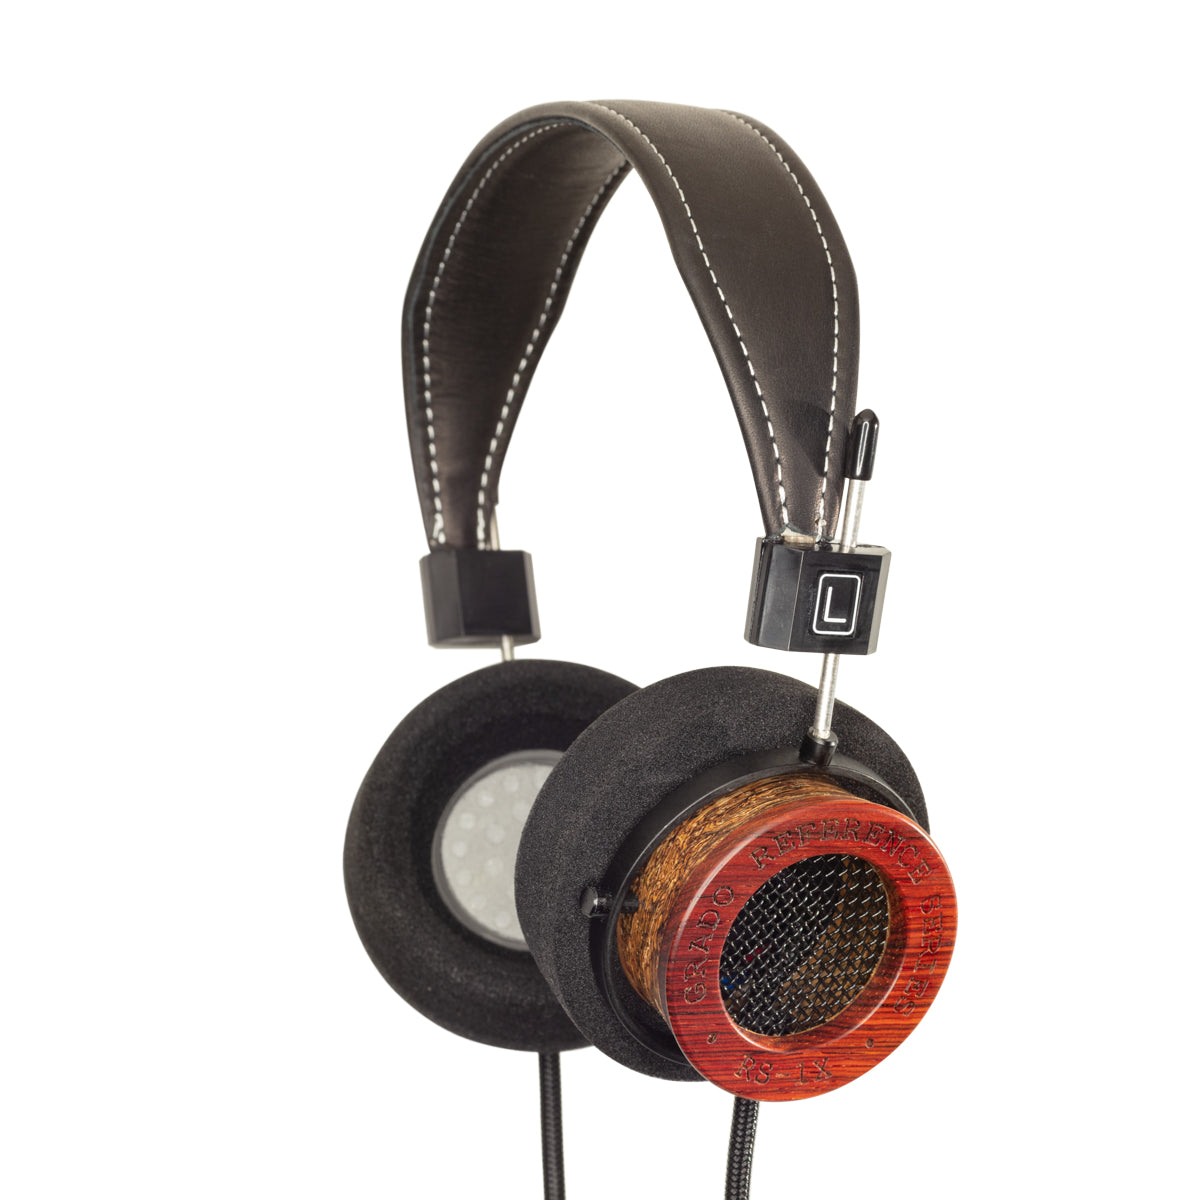 Beyerdynamic DT 770 Pro X Limited Edition headphones mark a centenary of  sound